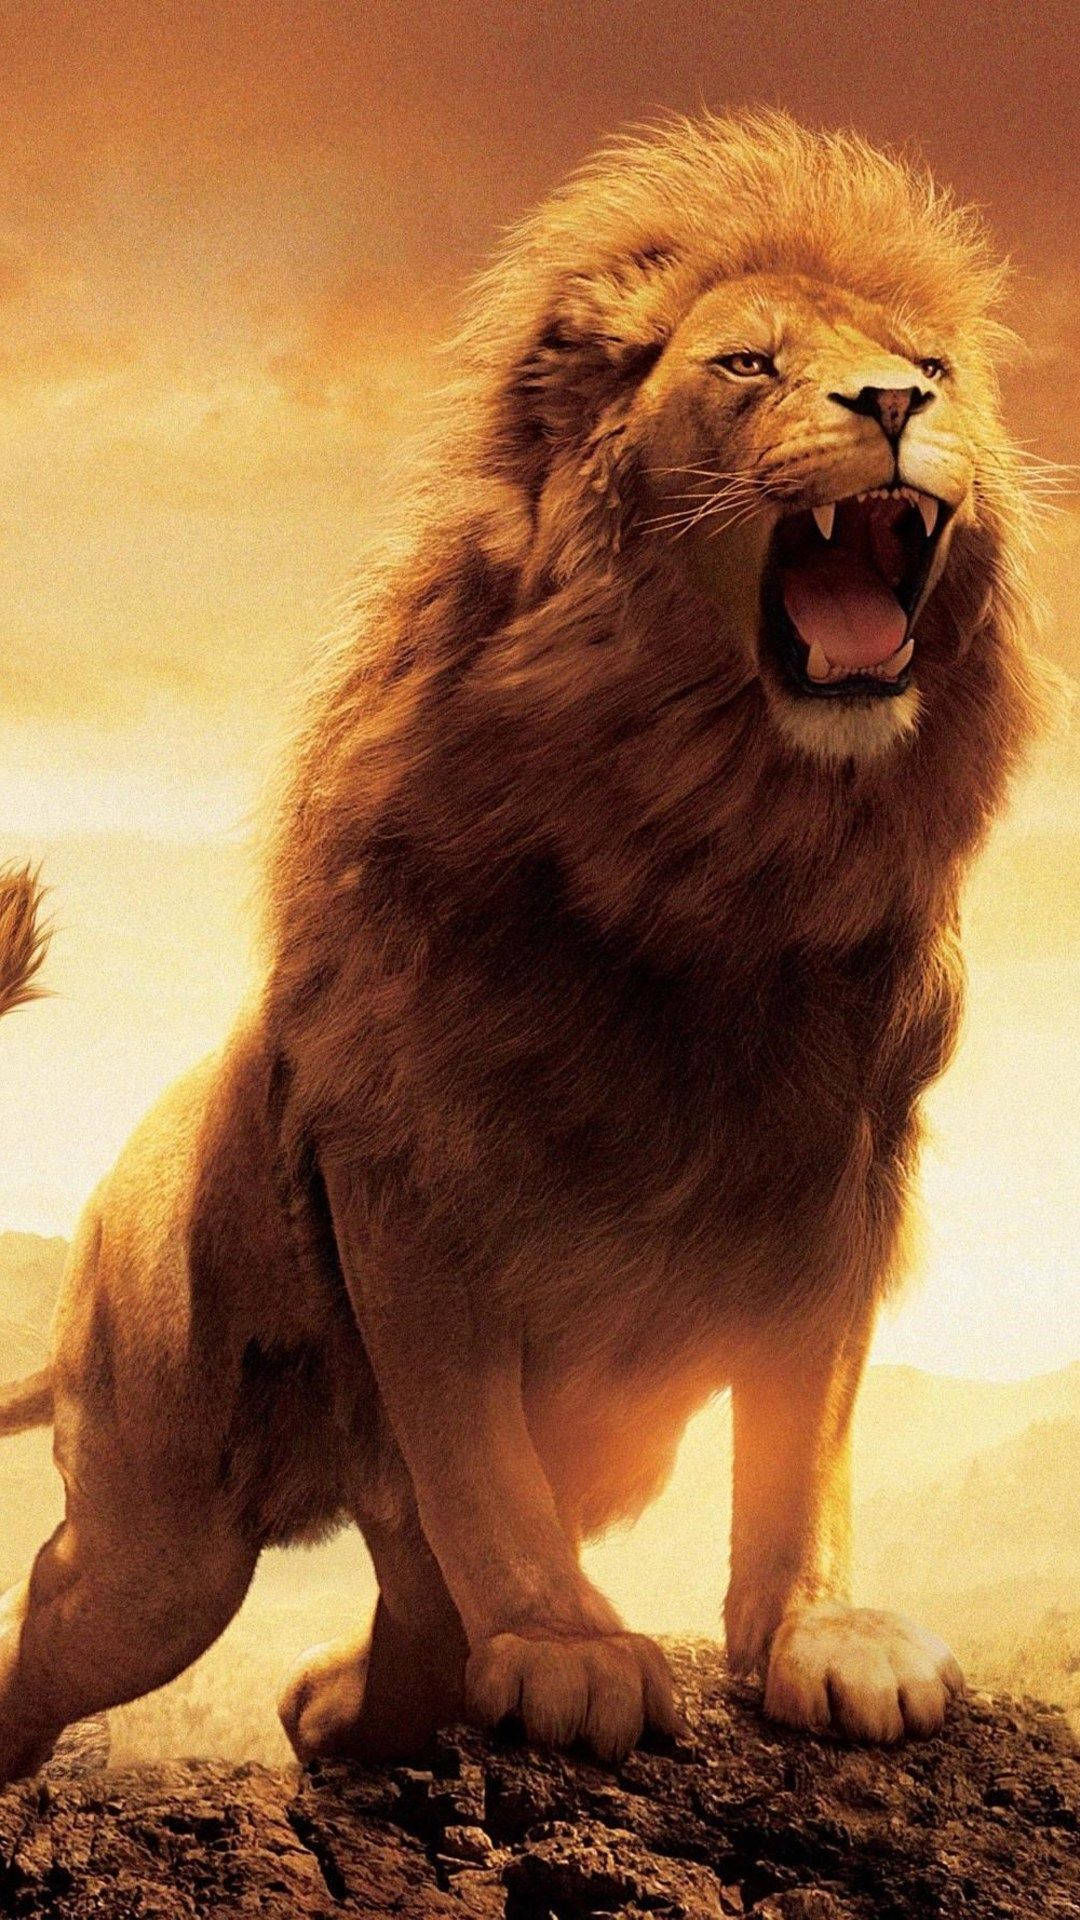 Roaring Wild Lion Iphone Background